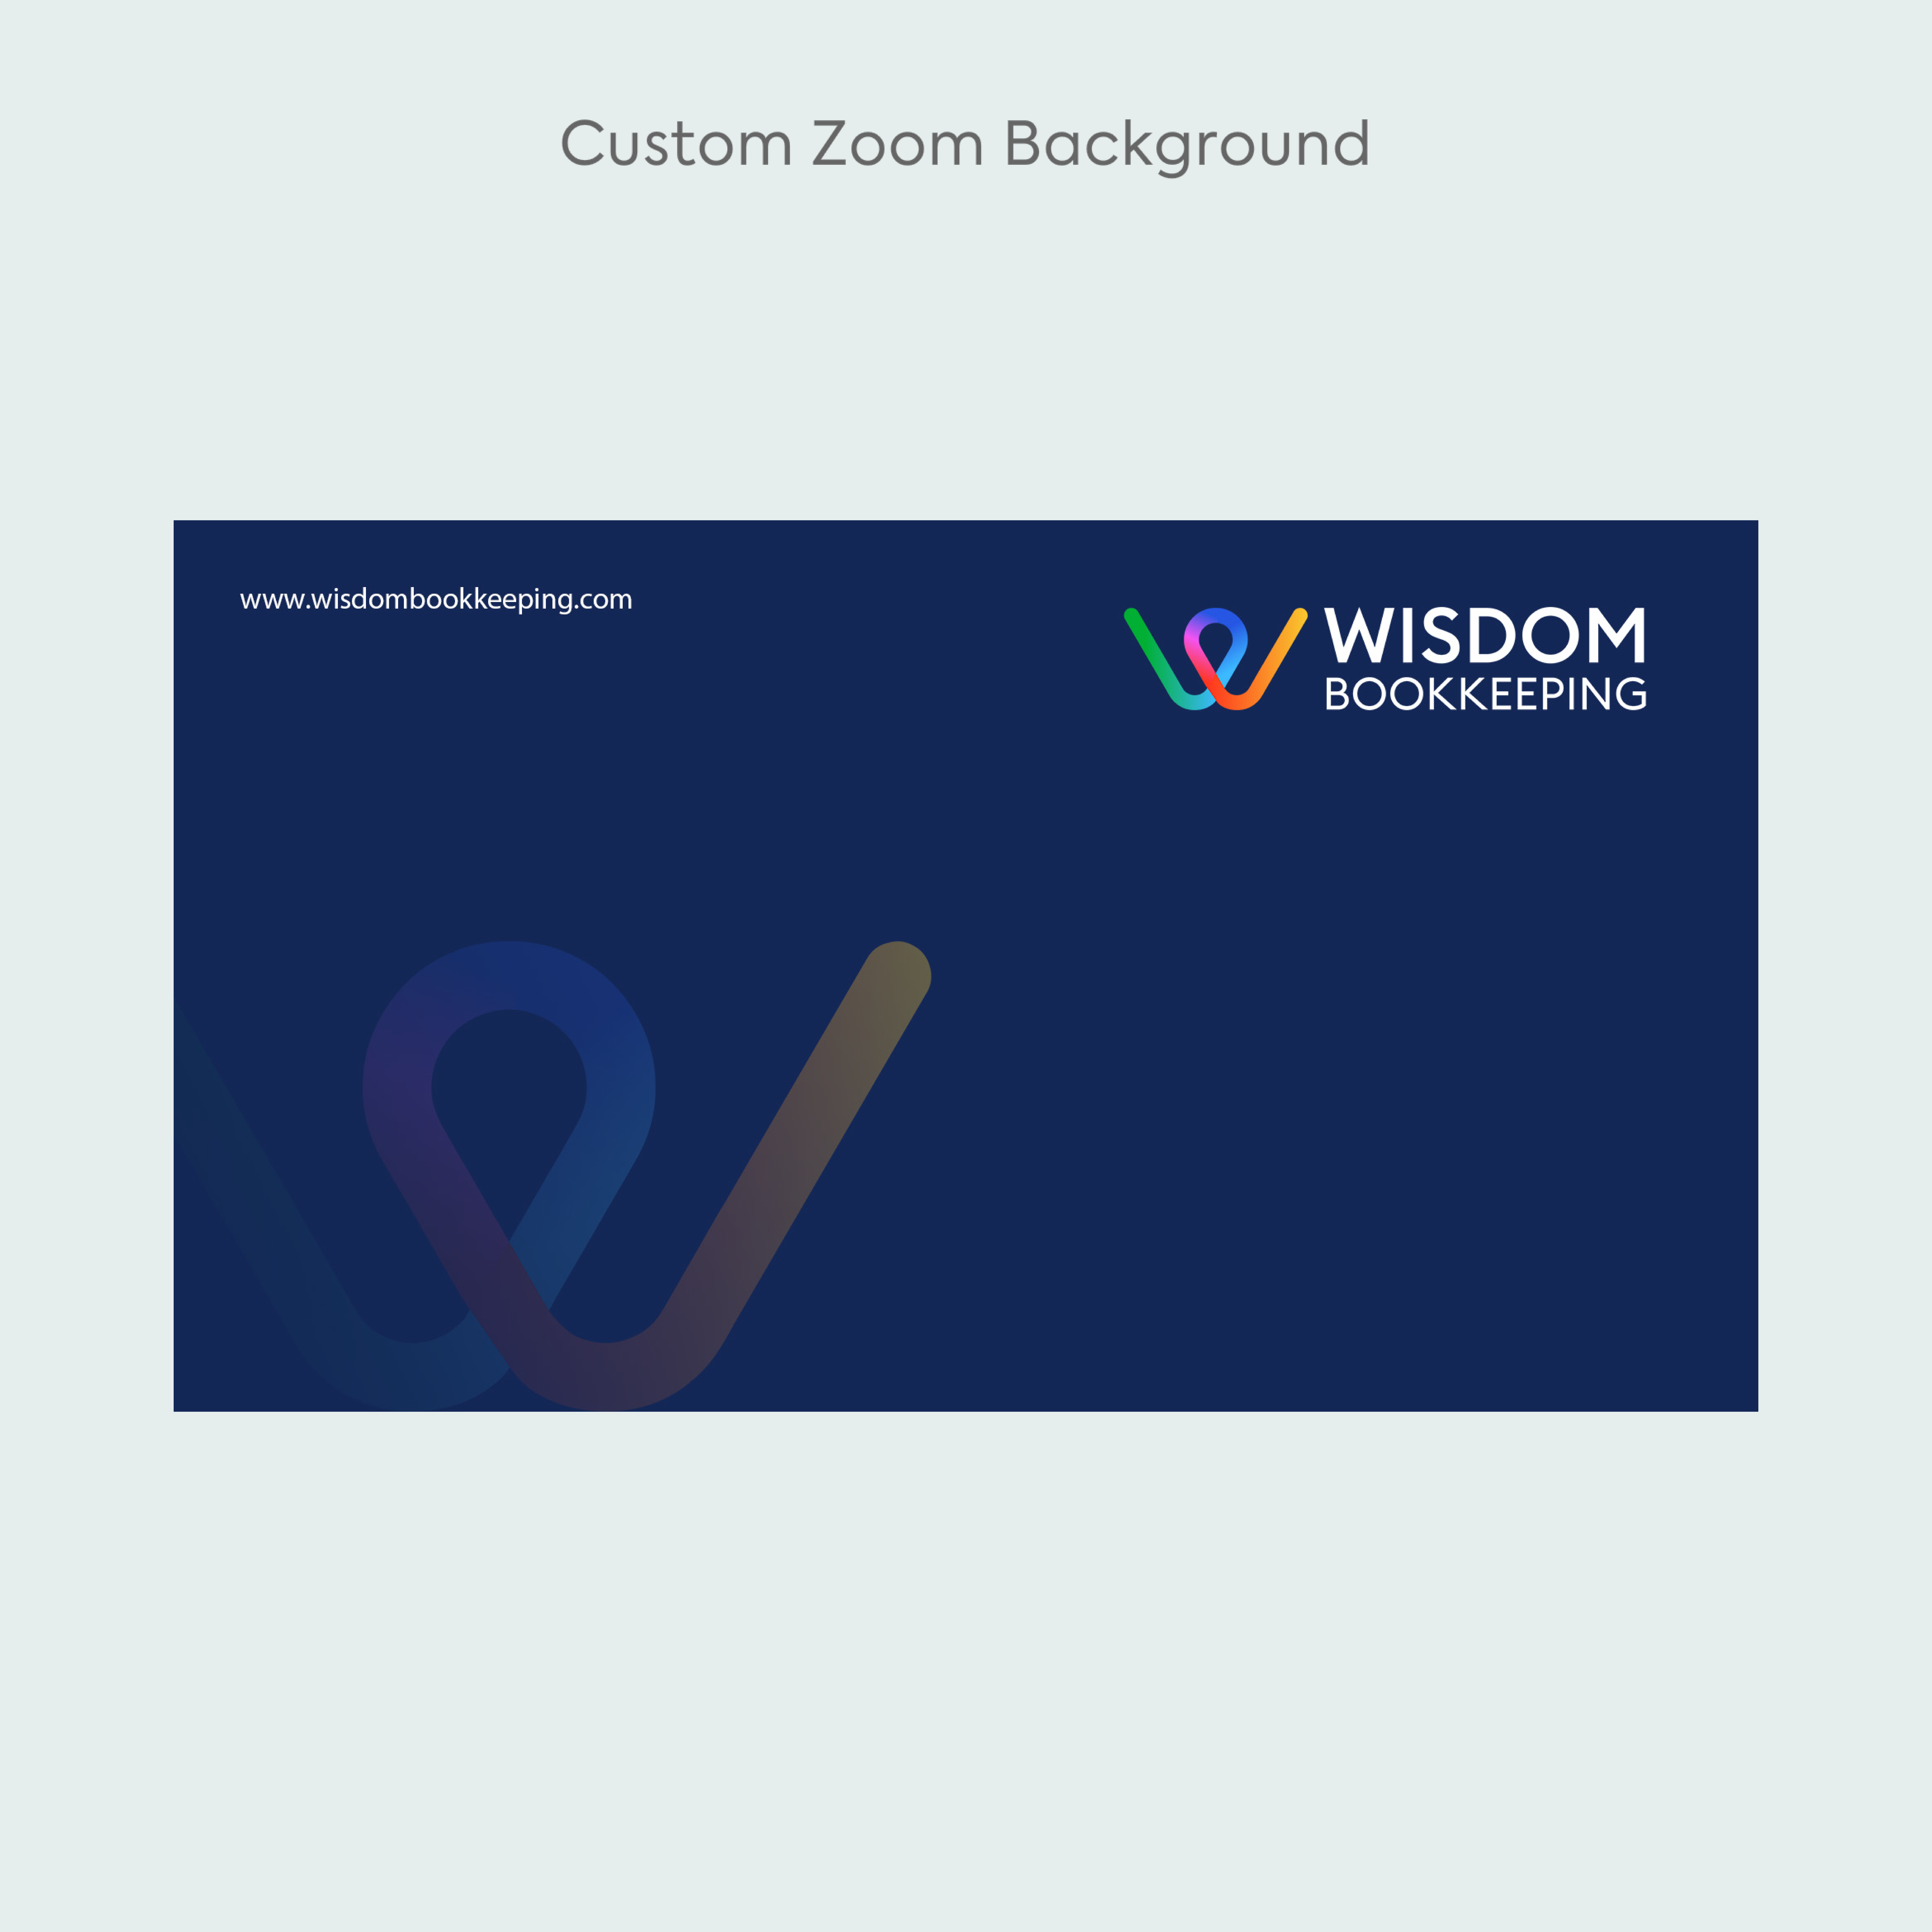 07 - Custom Zoom Background (2)